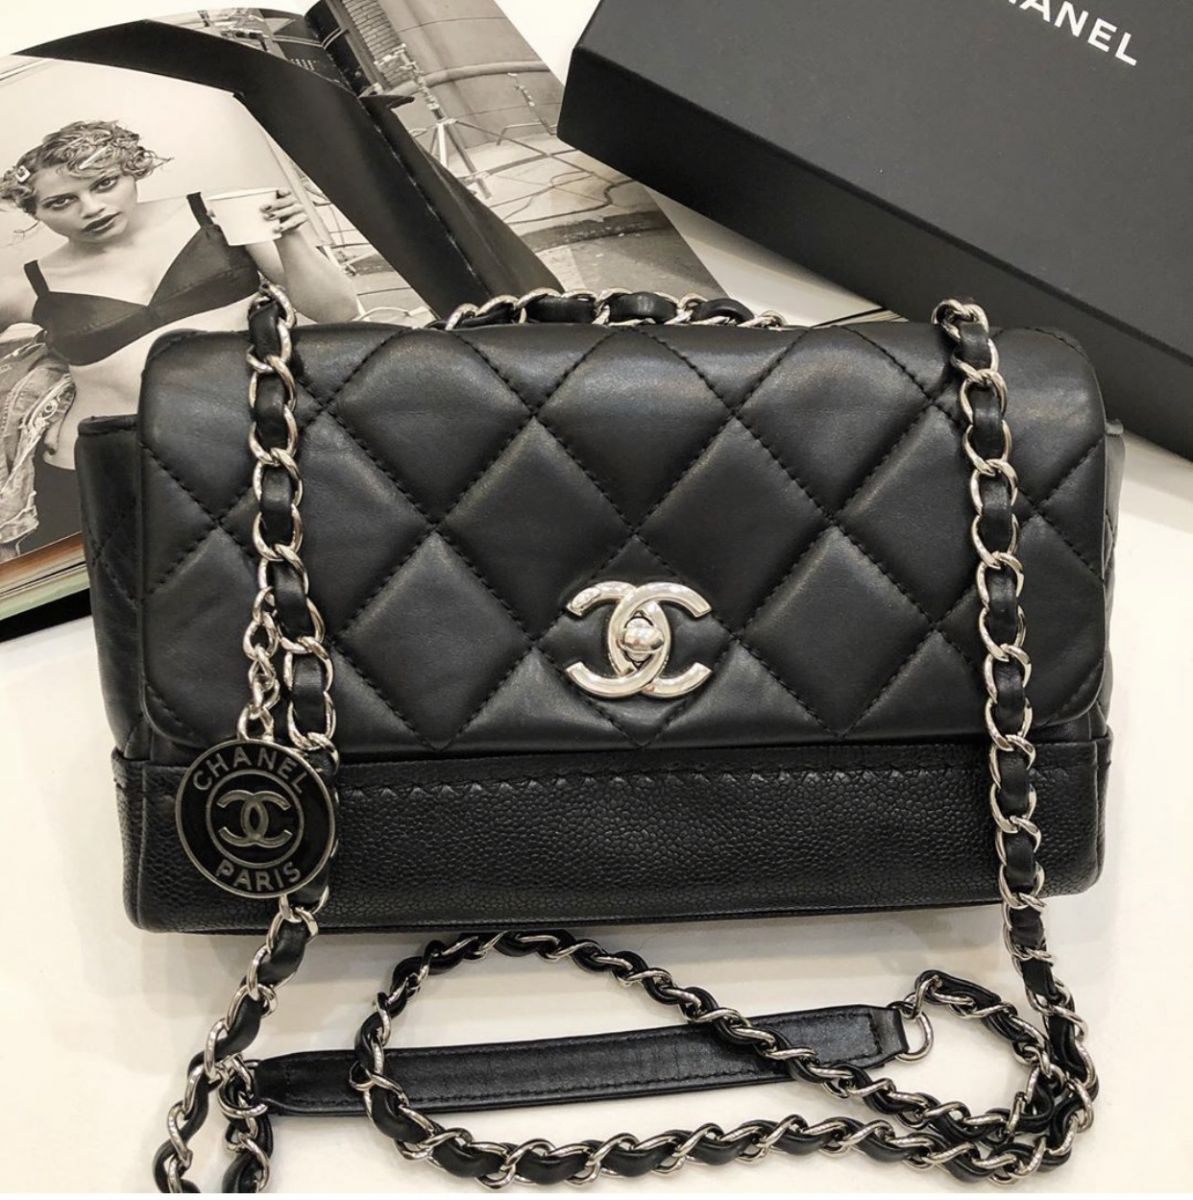 сумка Chanel размер 21/12 цена 61 540 руб 